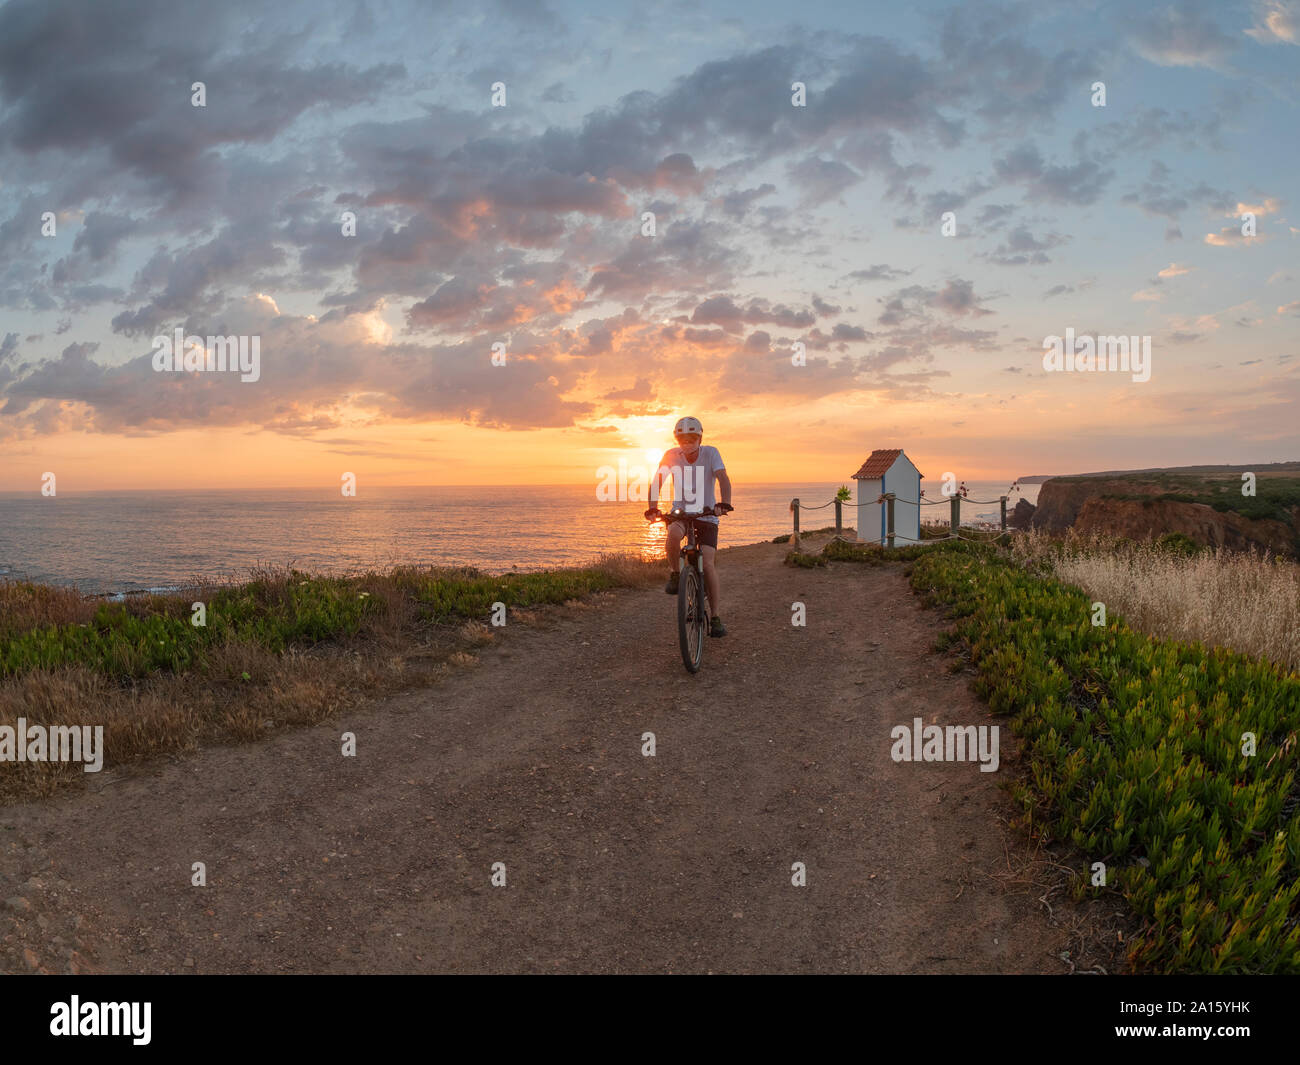 Portugal, Alentejo, senior man on e-bike at sunset Stock Photo